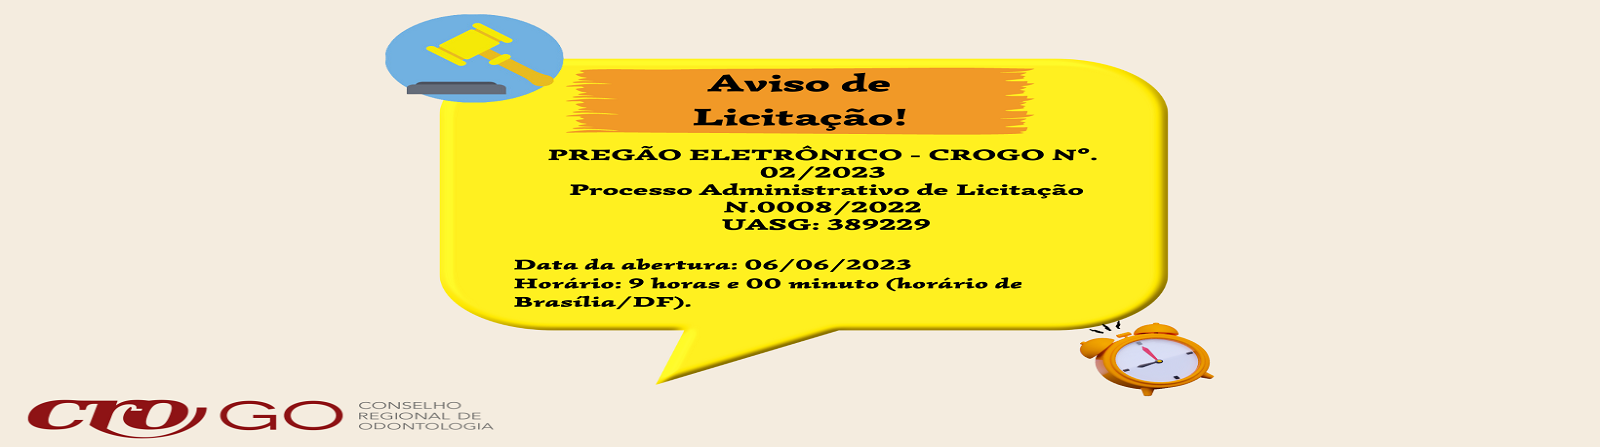 Aviso_de_Licitao_-_Prego_Eletrnico_n_002-2023_-_Banner_-_1600_x_447